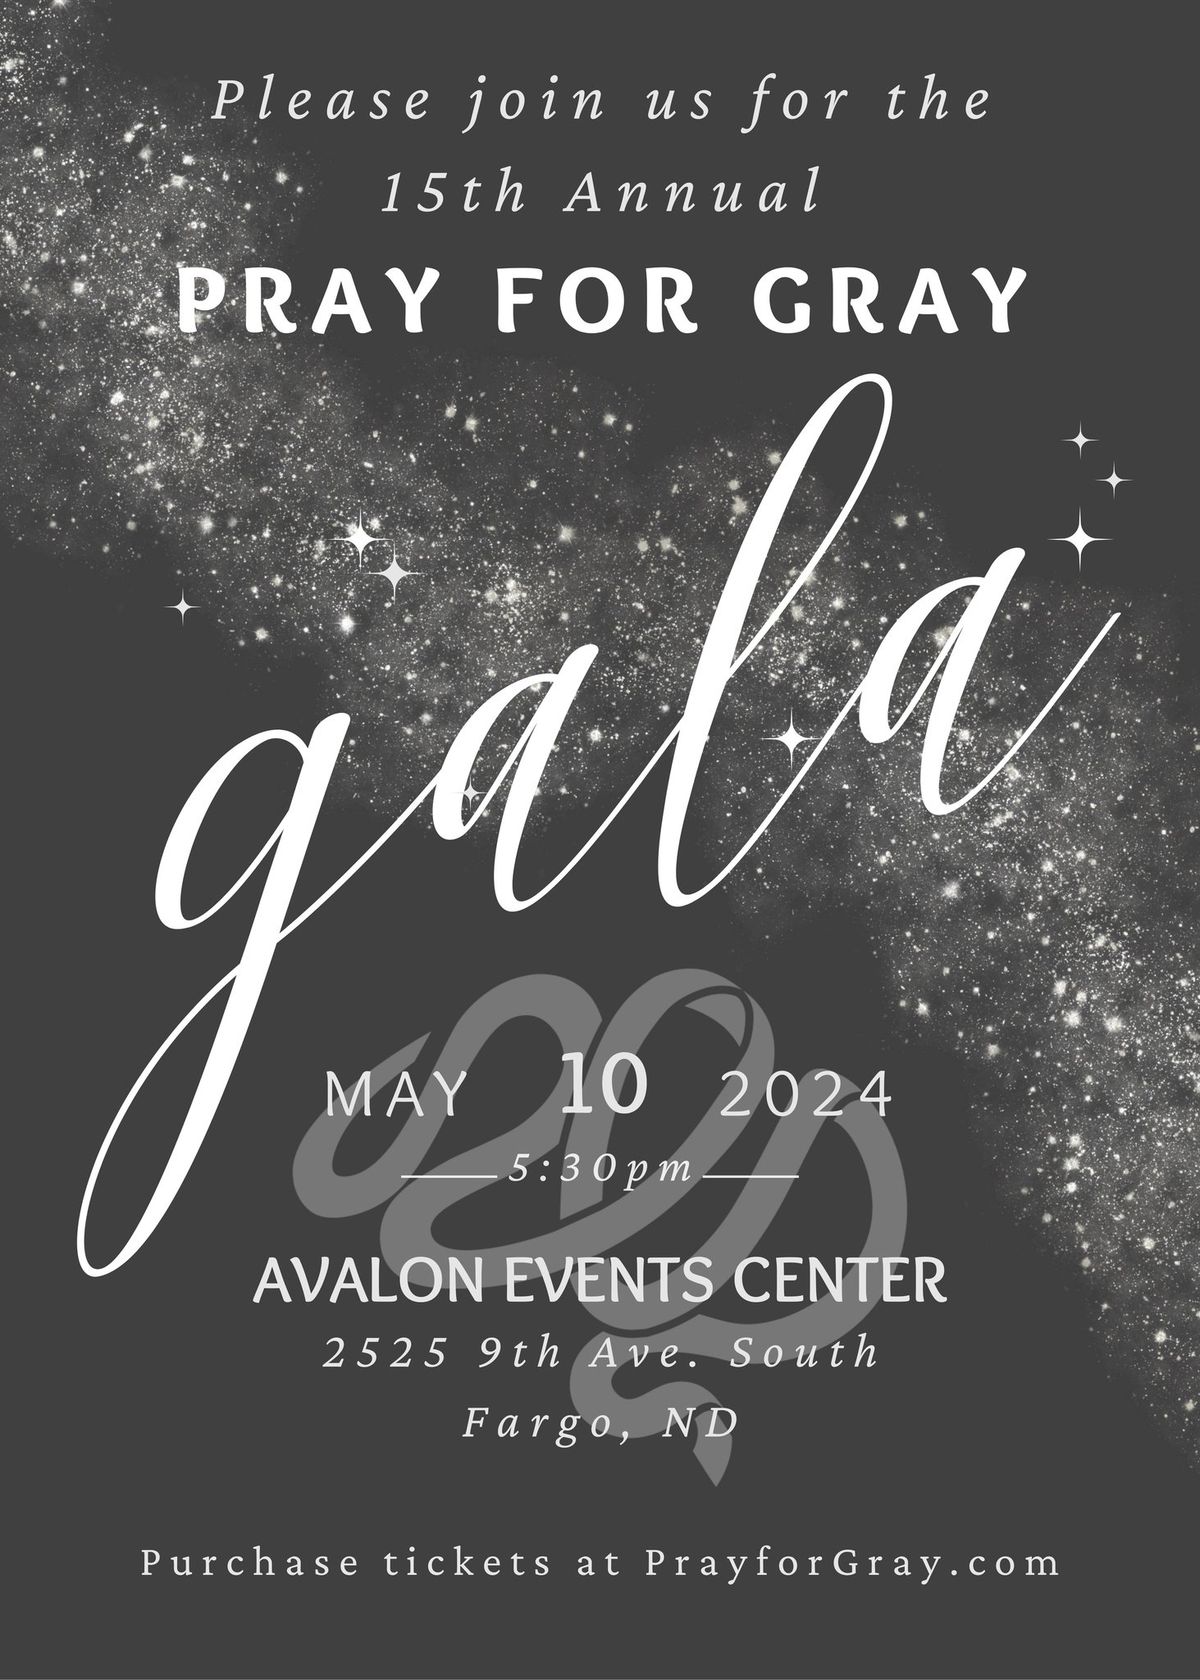 Pray for Gray 15th Annual Gala